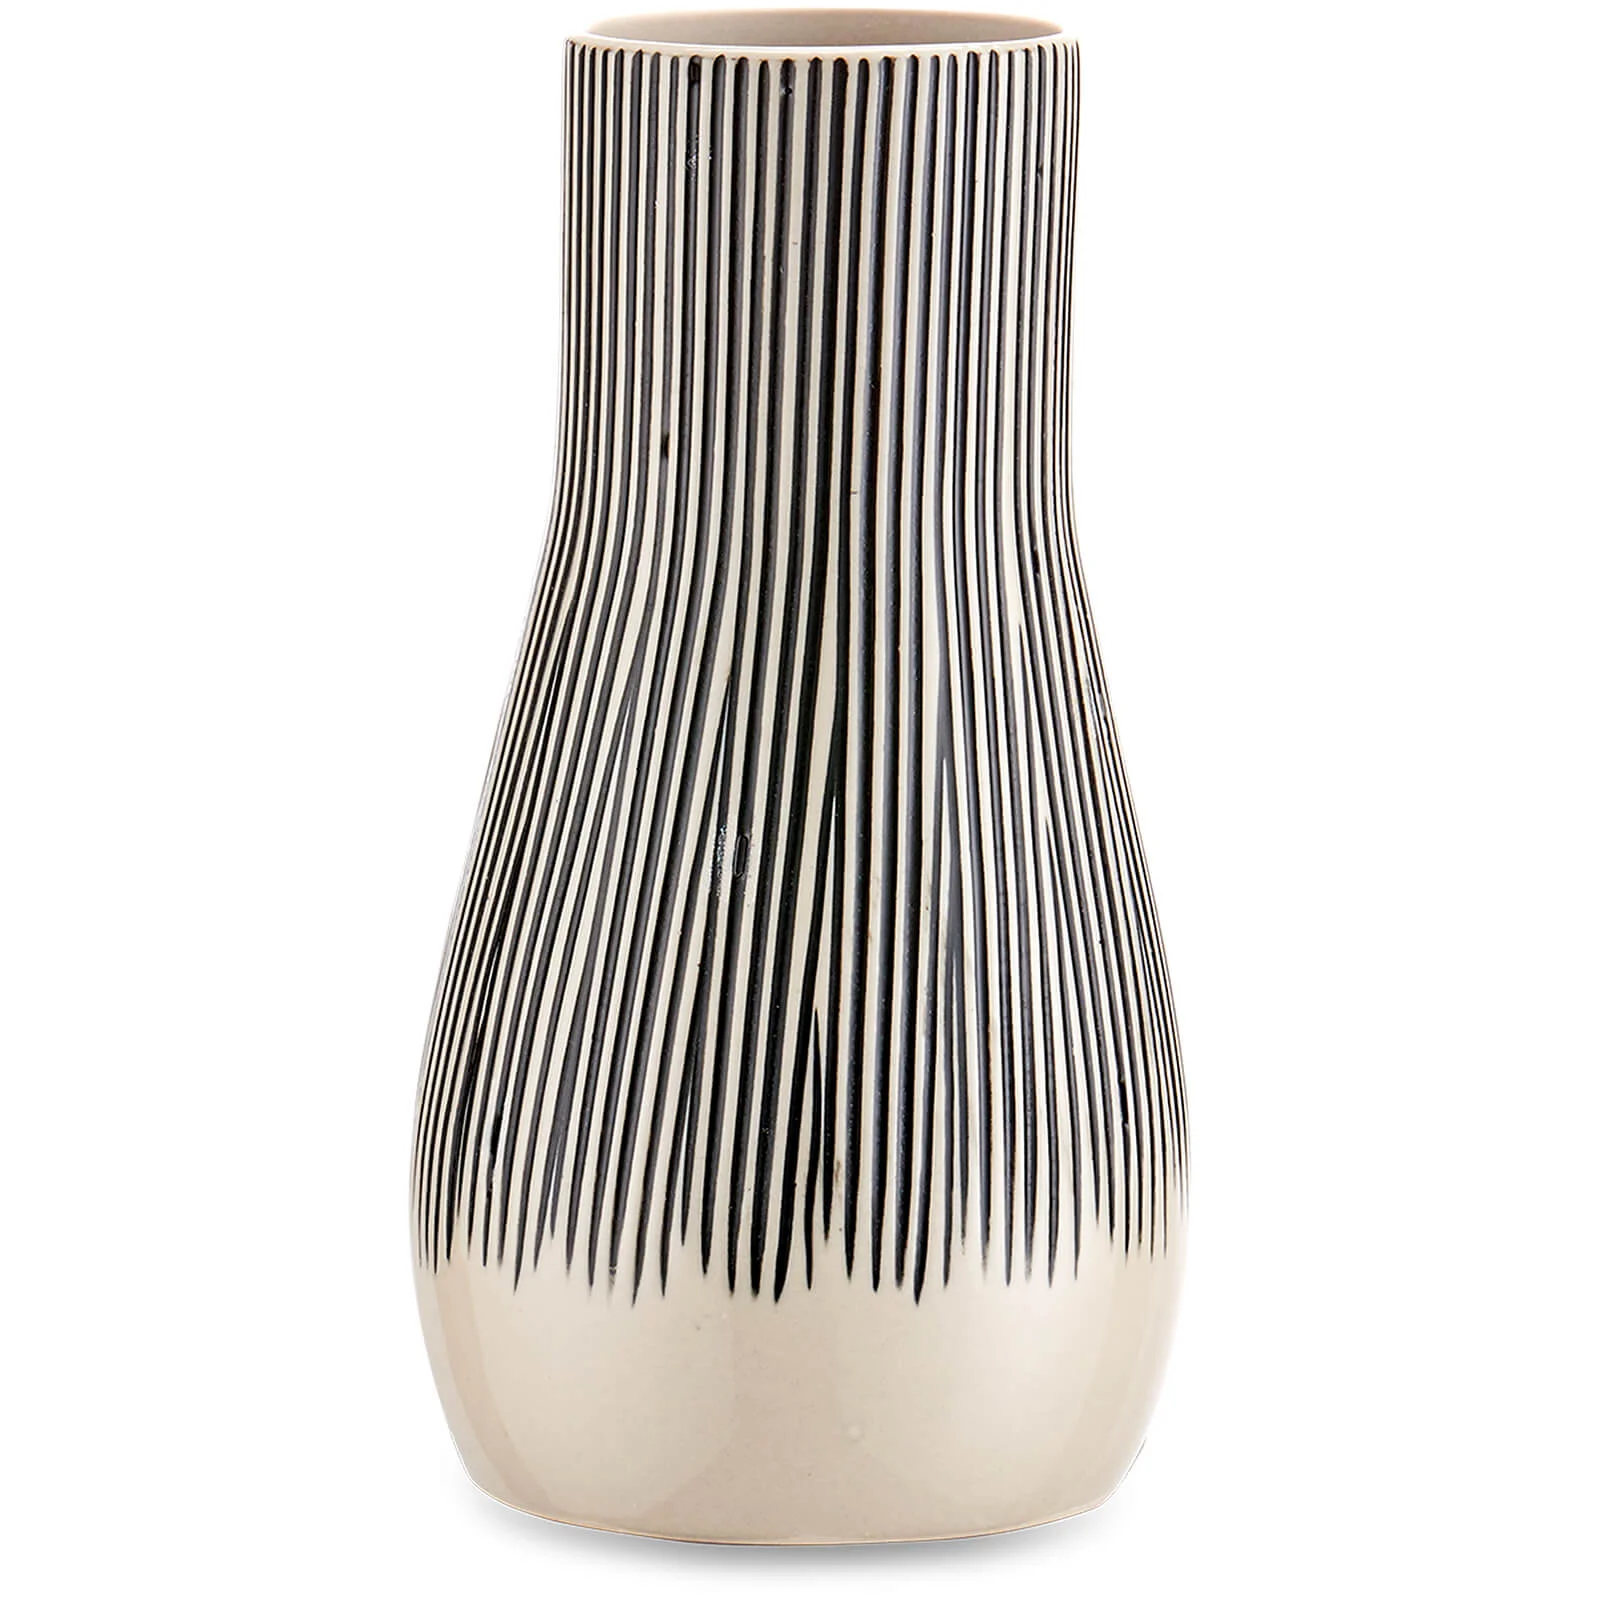 Nkuku Matamba Ceramic Vase - Black Lines - 19cm Image 1